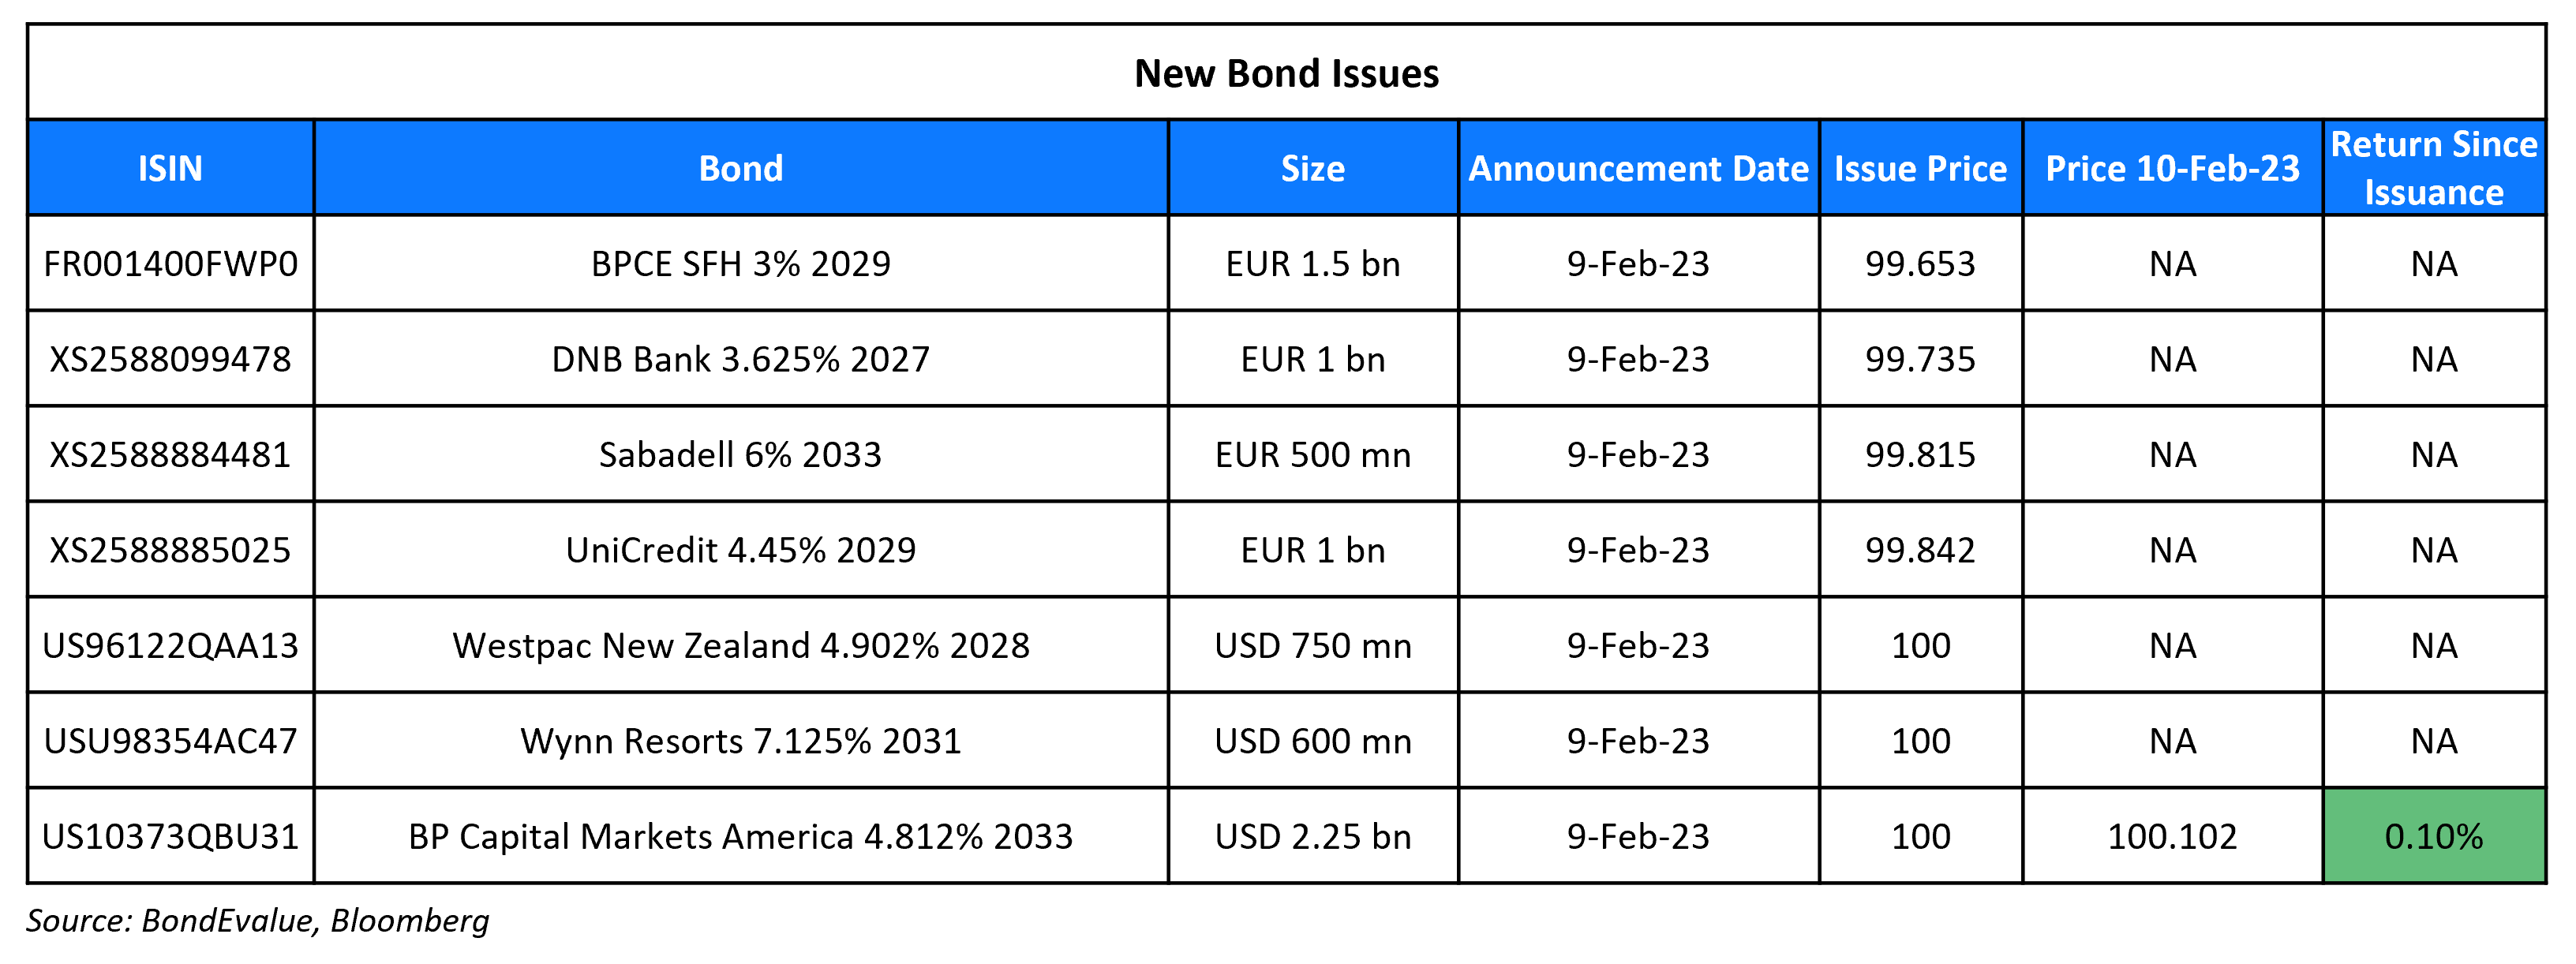 New Bond Issues 10 Feb 23